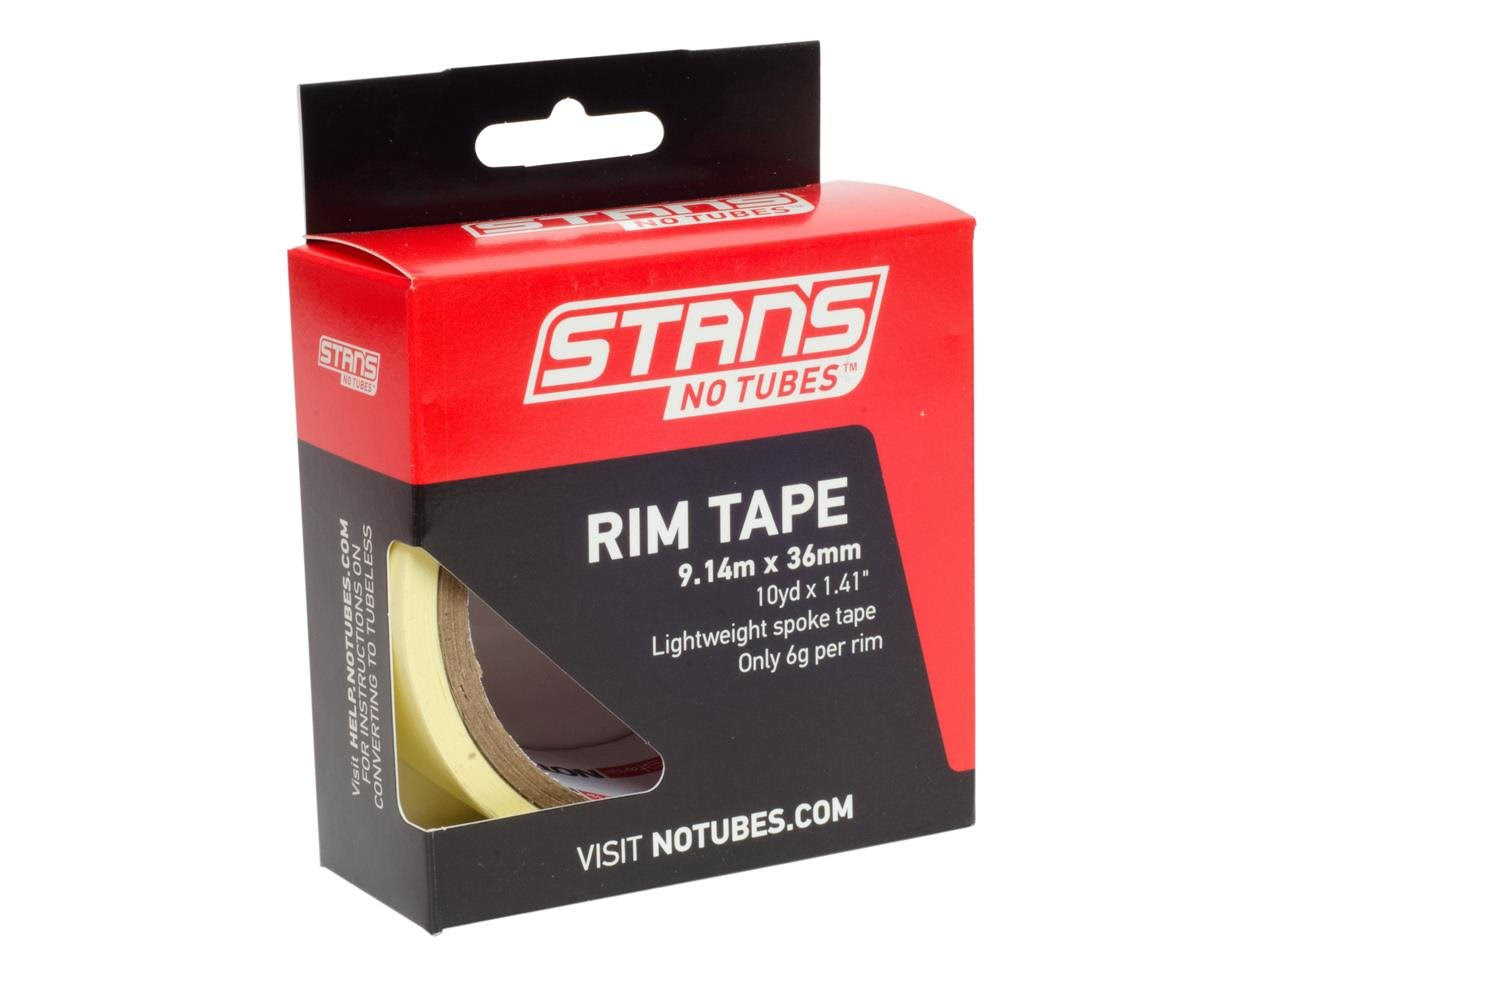 Stan's NoTubes Rim Tape - 36mm x 10yd